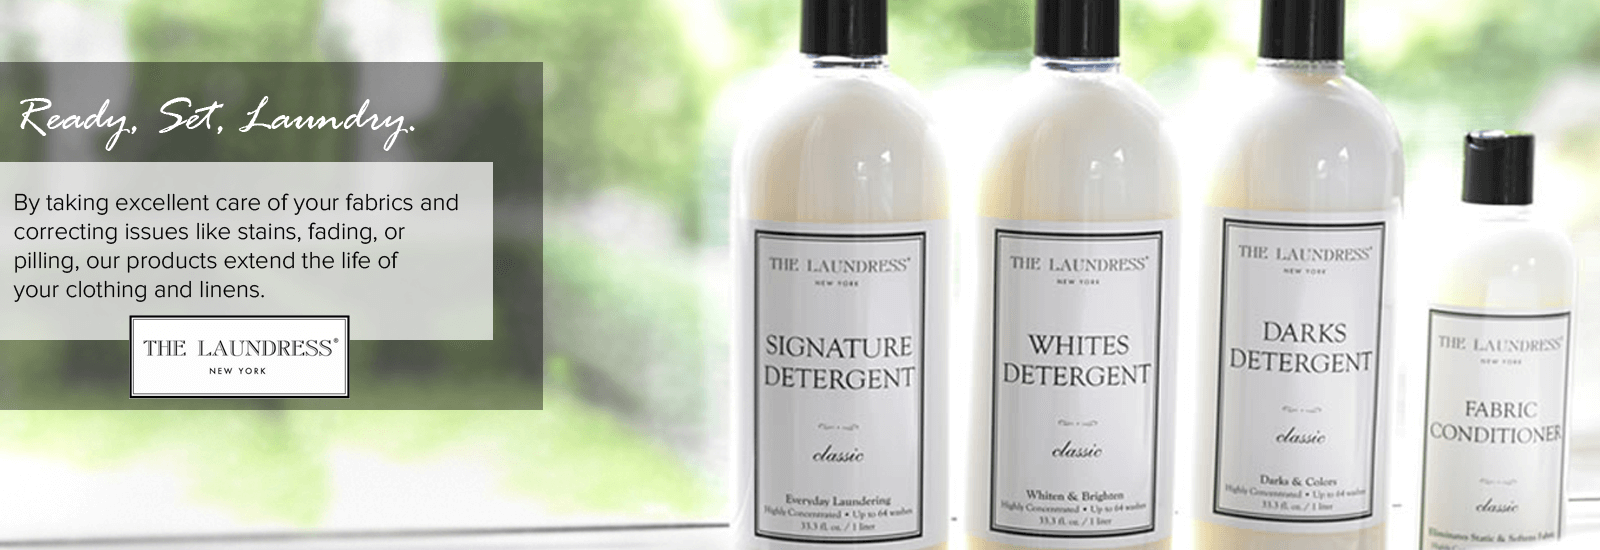 The Laundress Signature Detergent